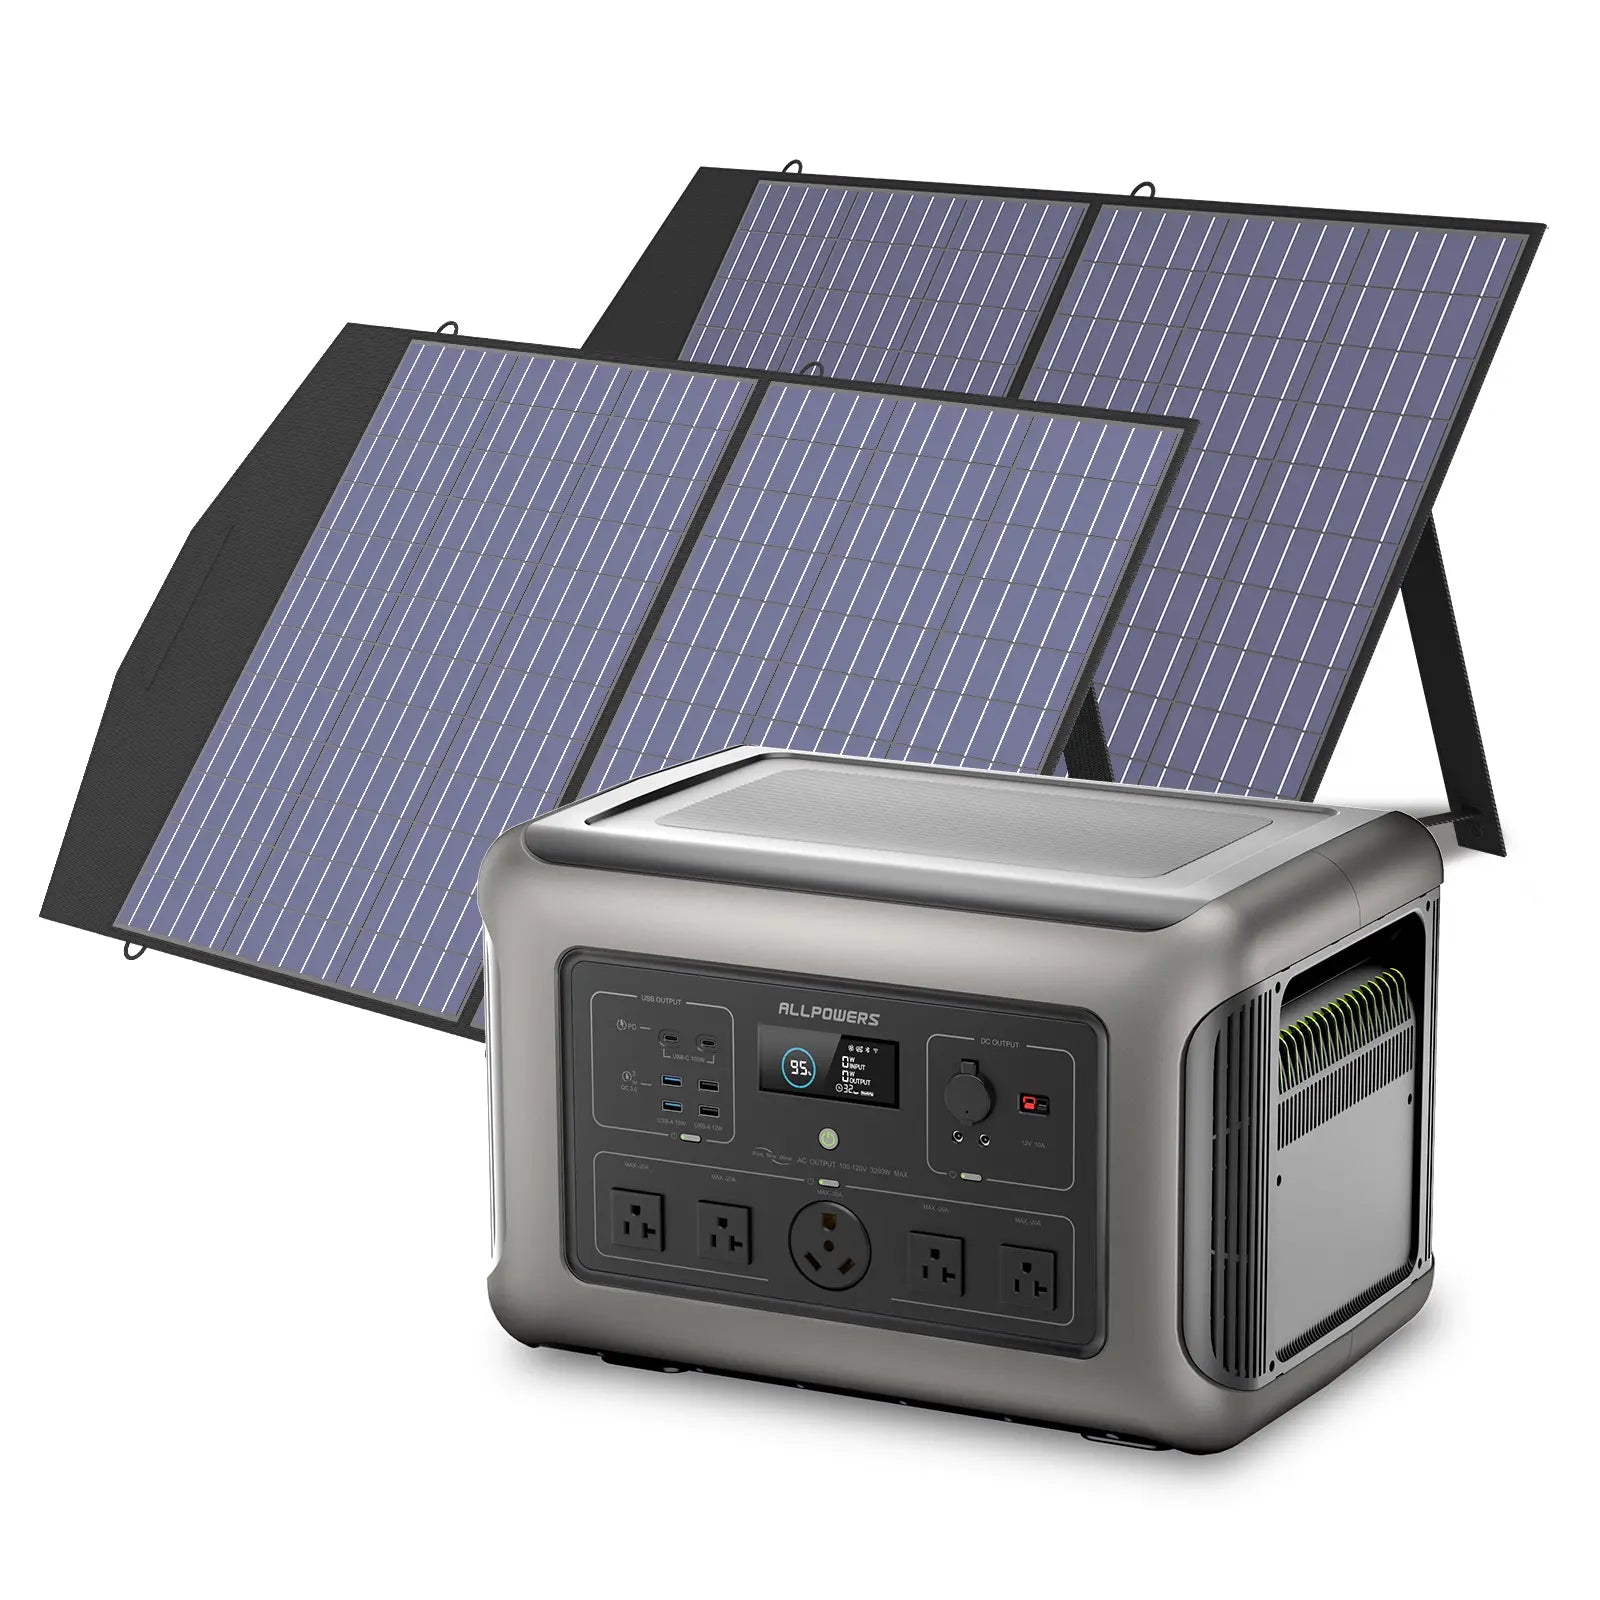 ALLPOWERS Solar Generator Kit 3200W (R3500 + 2 x SP027 100W Solar Panel)